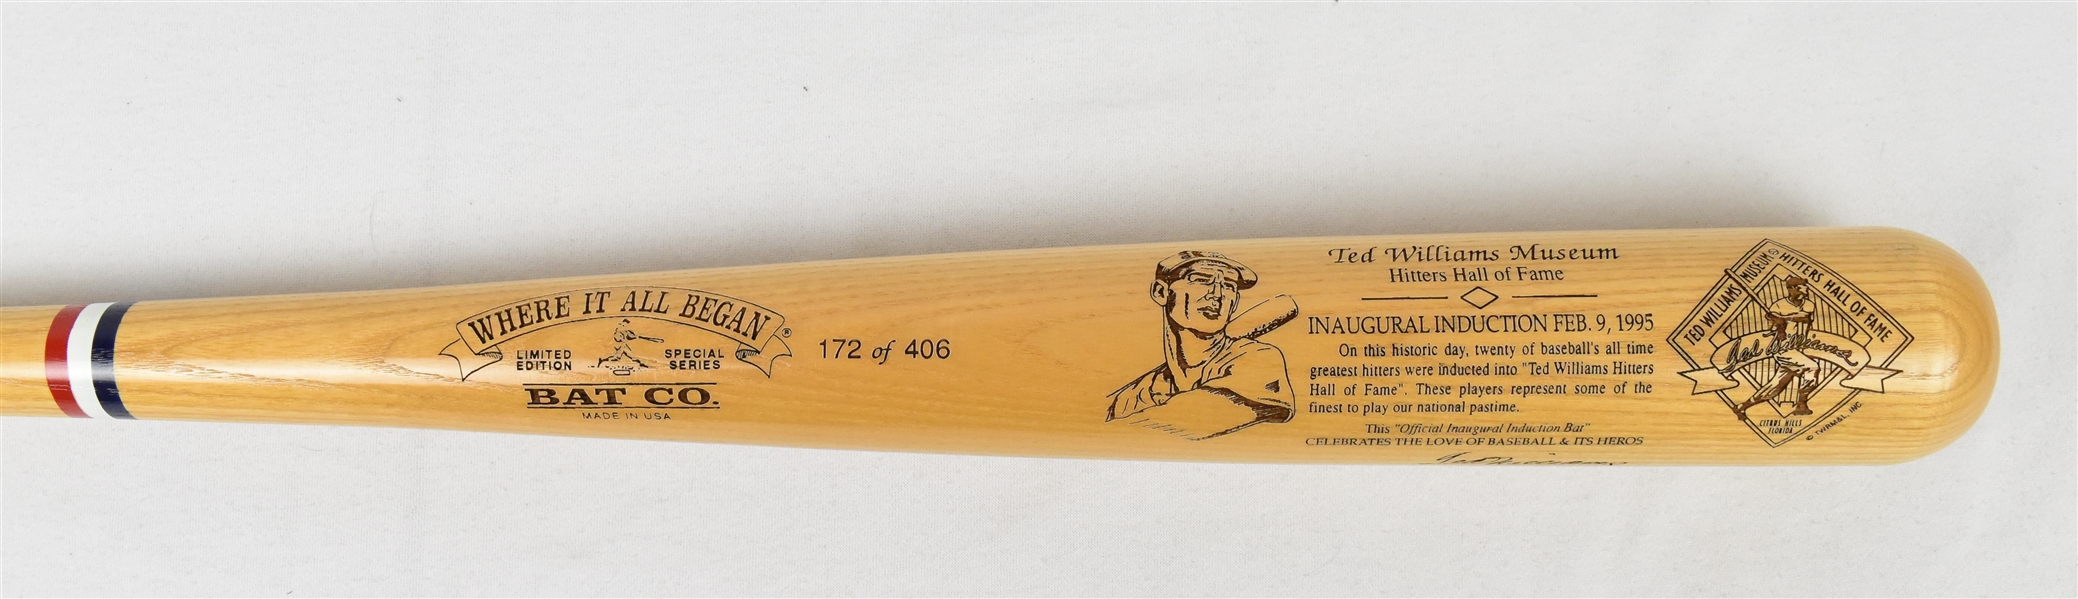 Ted Williams Limited Edition Baseball Bat